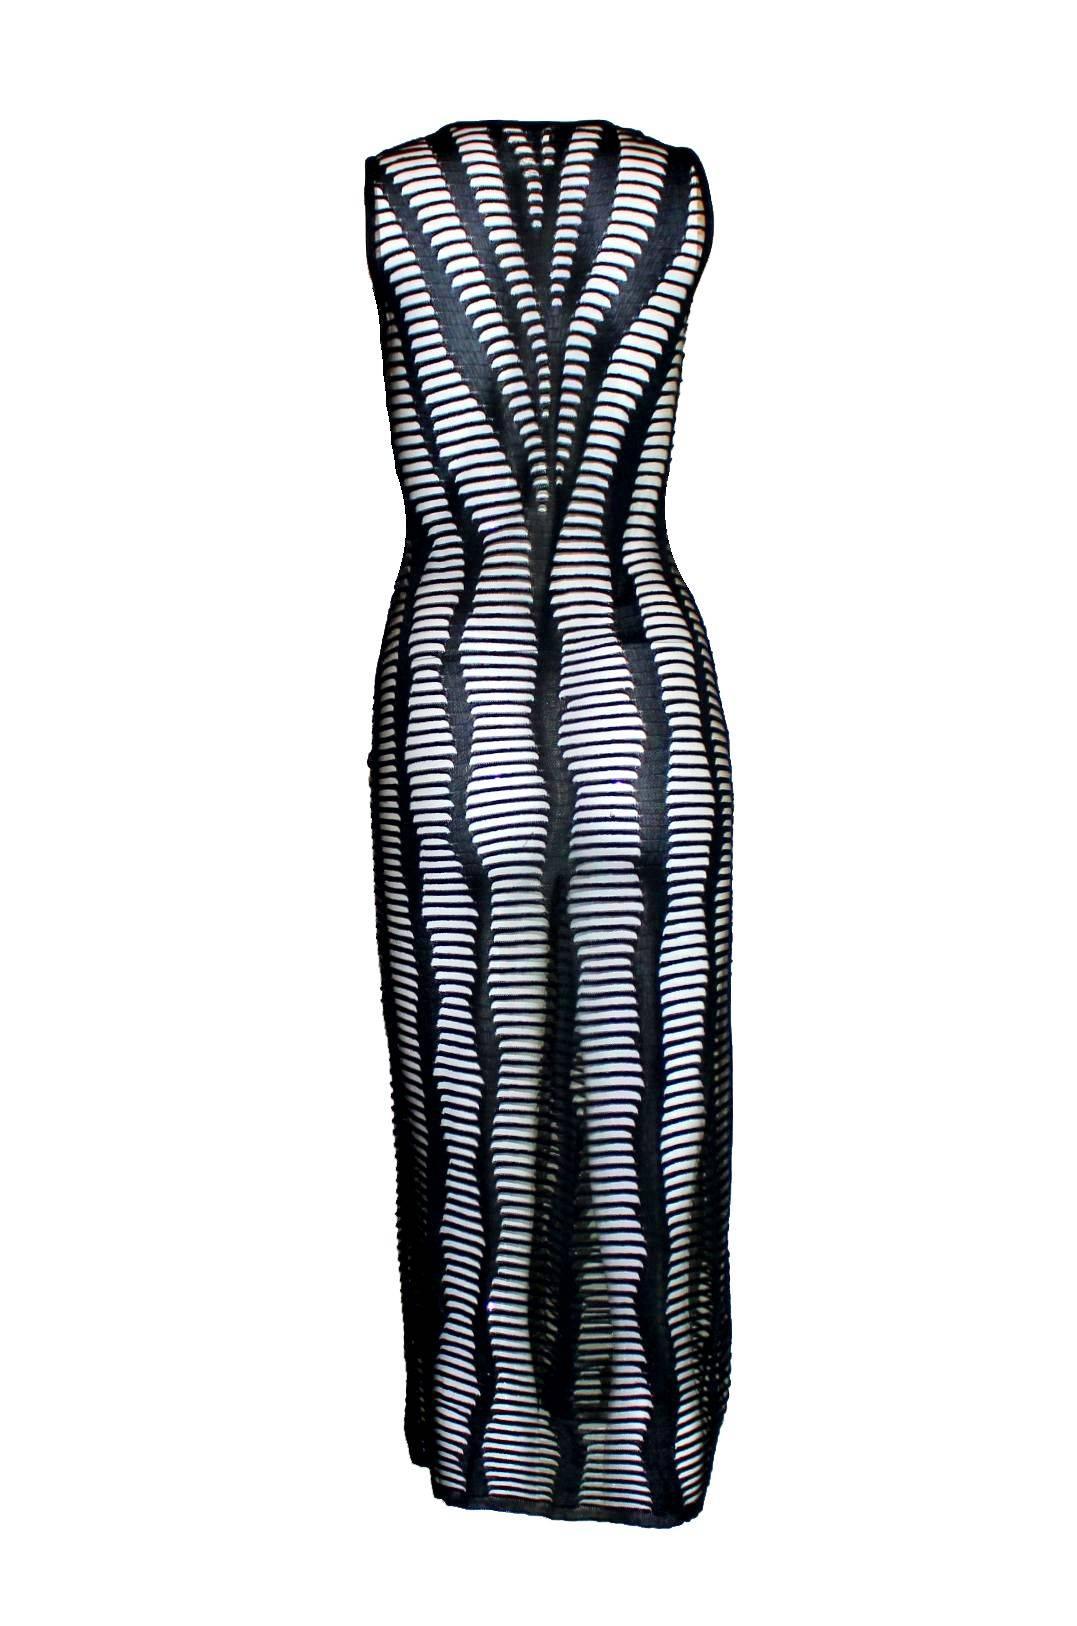 UNWORN Christian Dior by John Galliano 2001 Black Mesh Knit Midi Dress Summer 38 In New Condition For Sale In Switzerland, CH